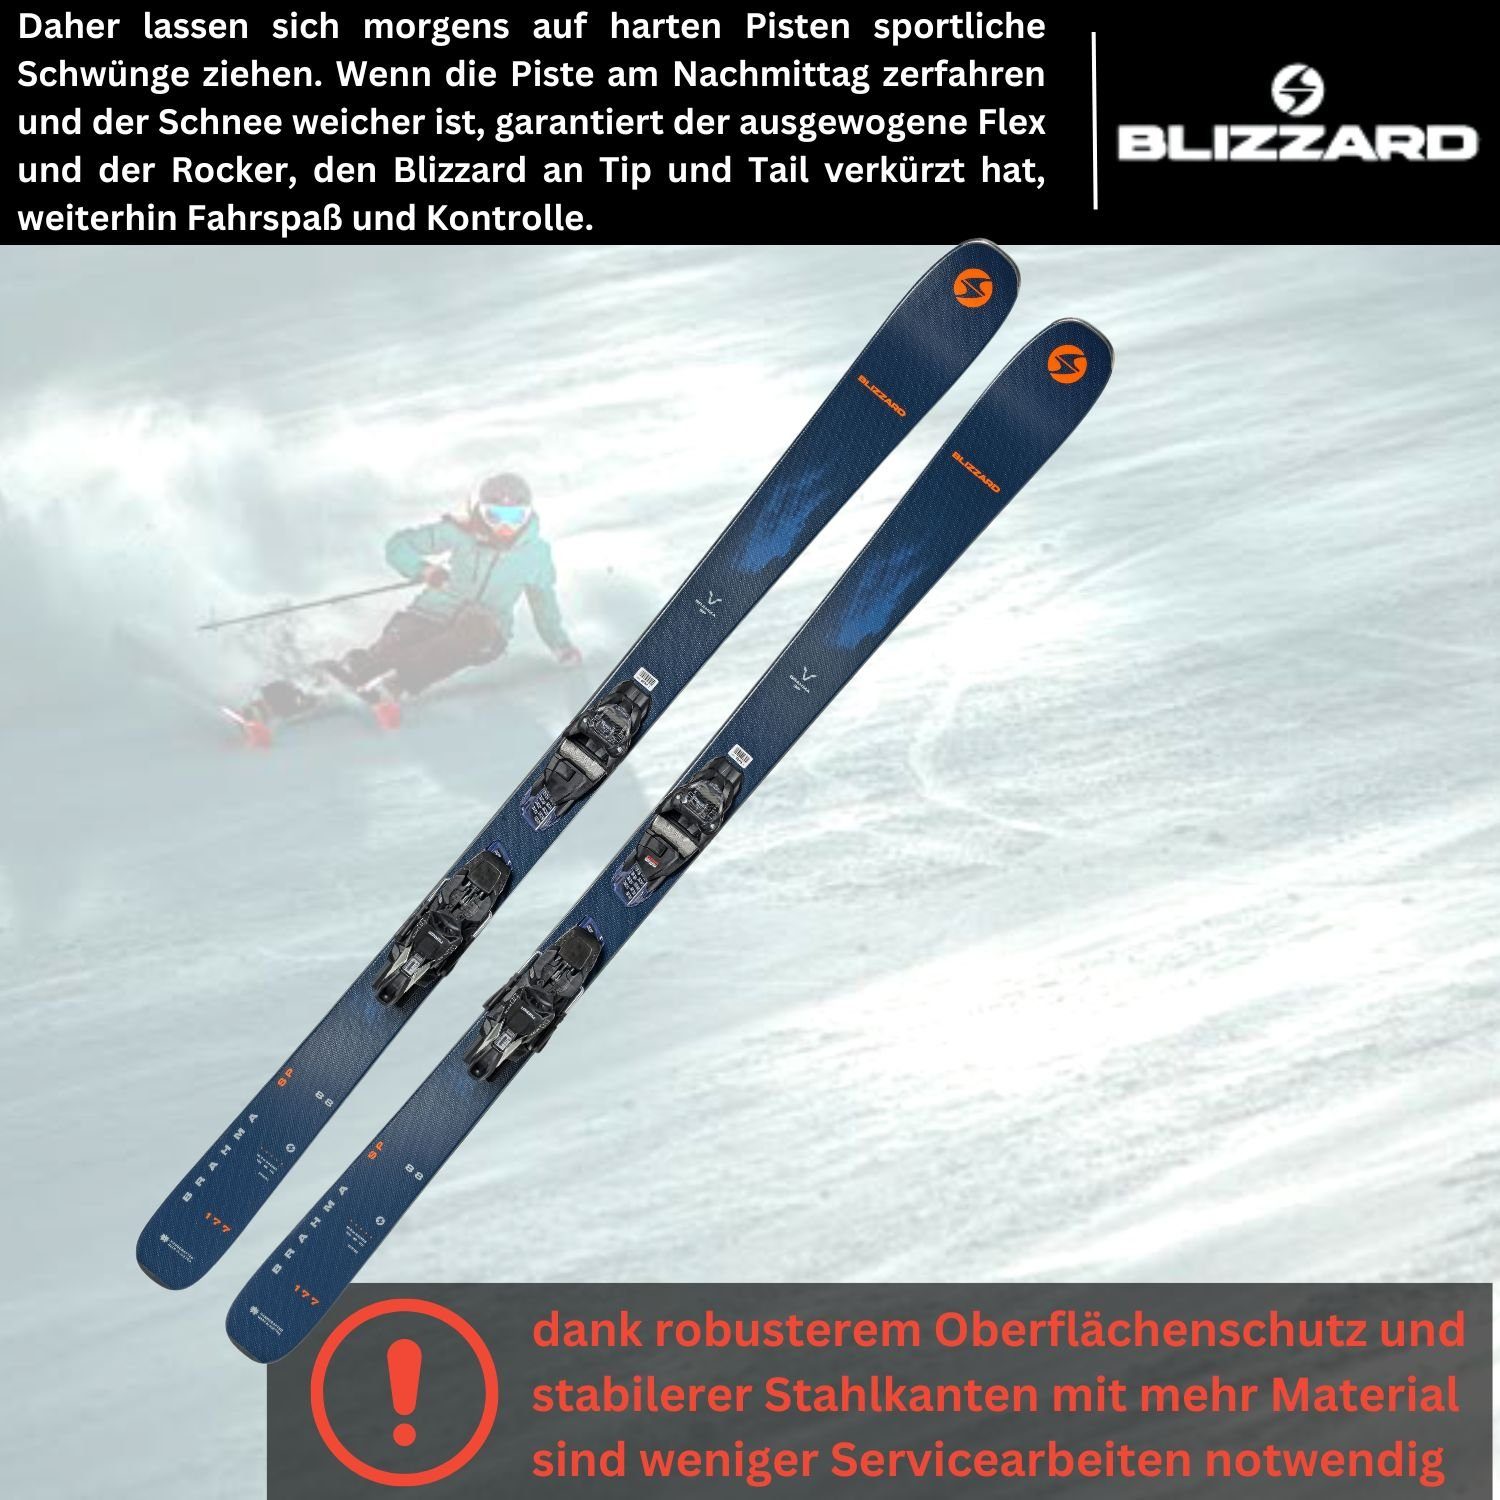 11 Camber BLIZZARD Marker Ski, Brahma 88 Rocker Blizzard Ski TCX + Z3-11 Bindung